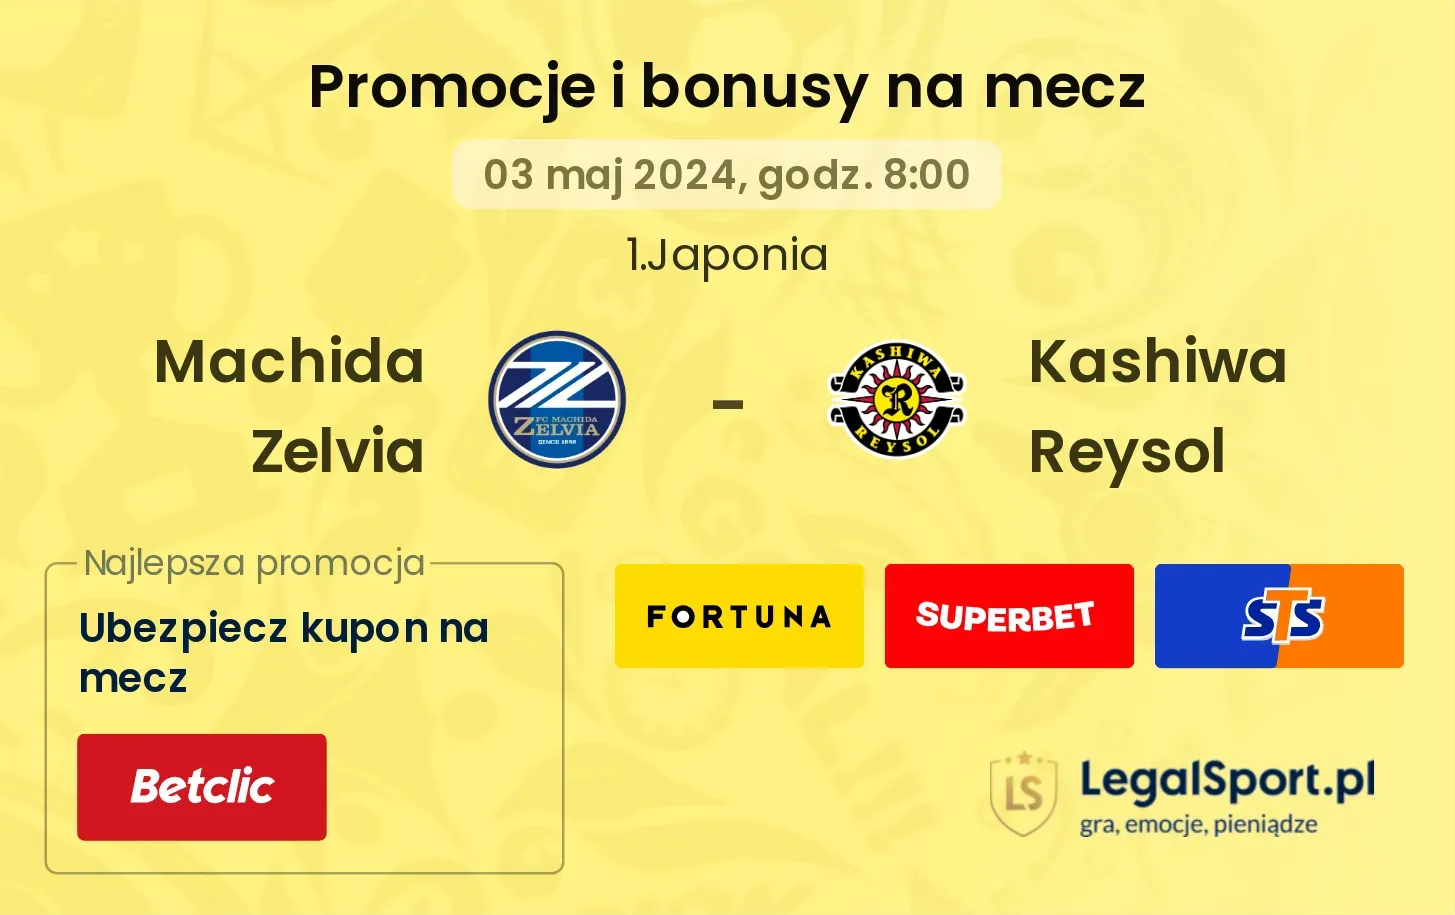 Machida Zelvia - Kashiwa Reysol promocje bonusy na mecz